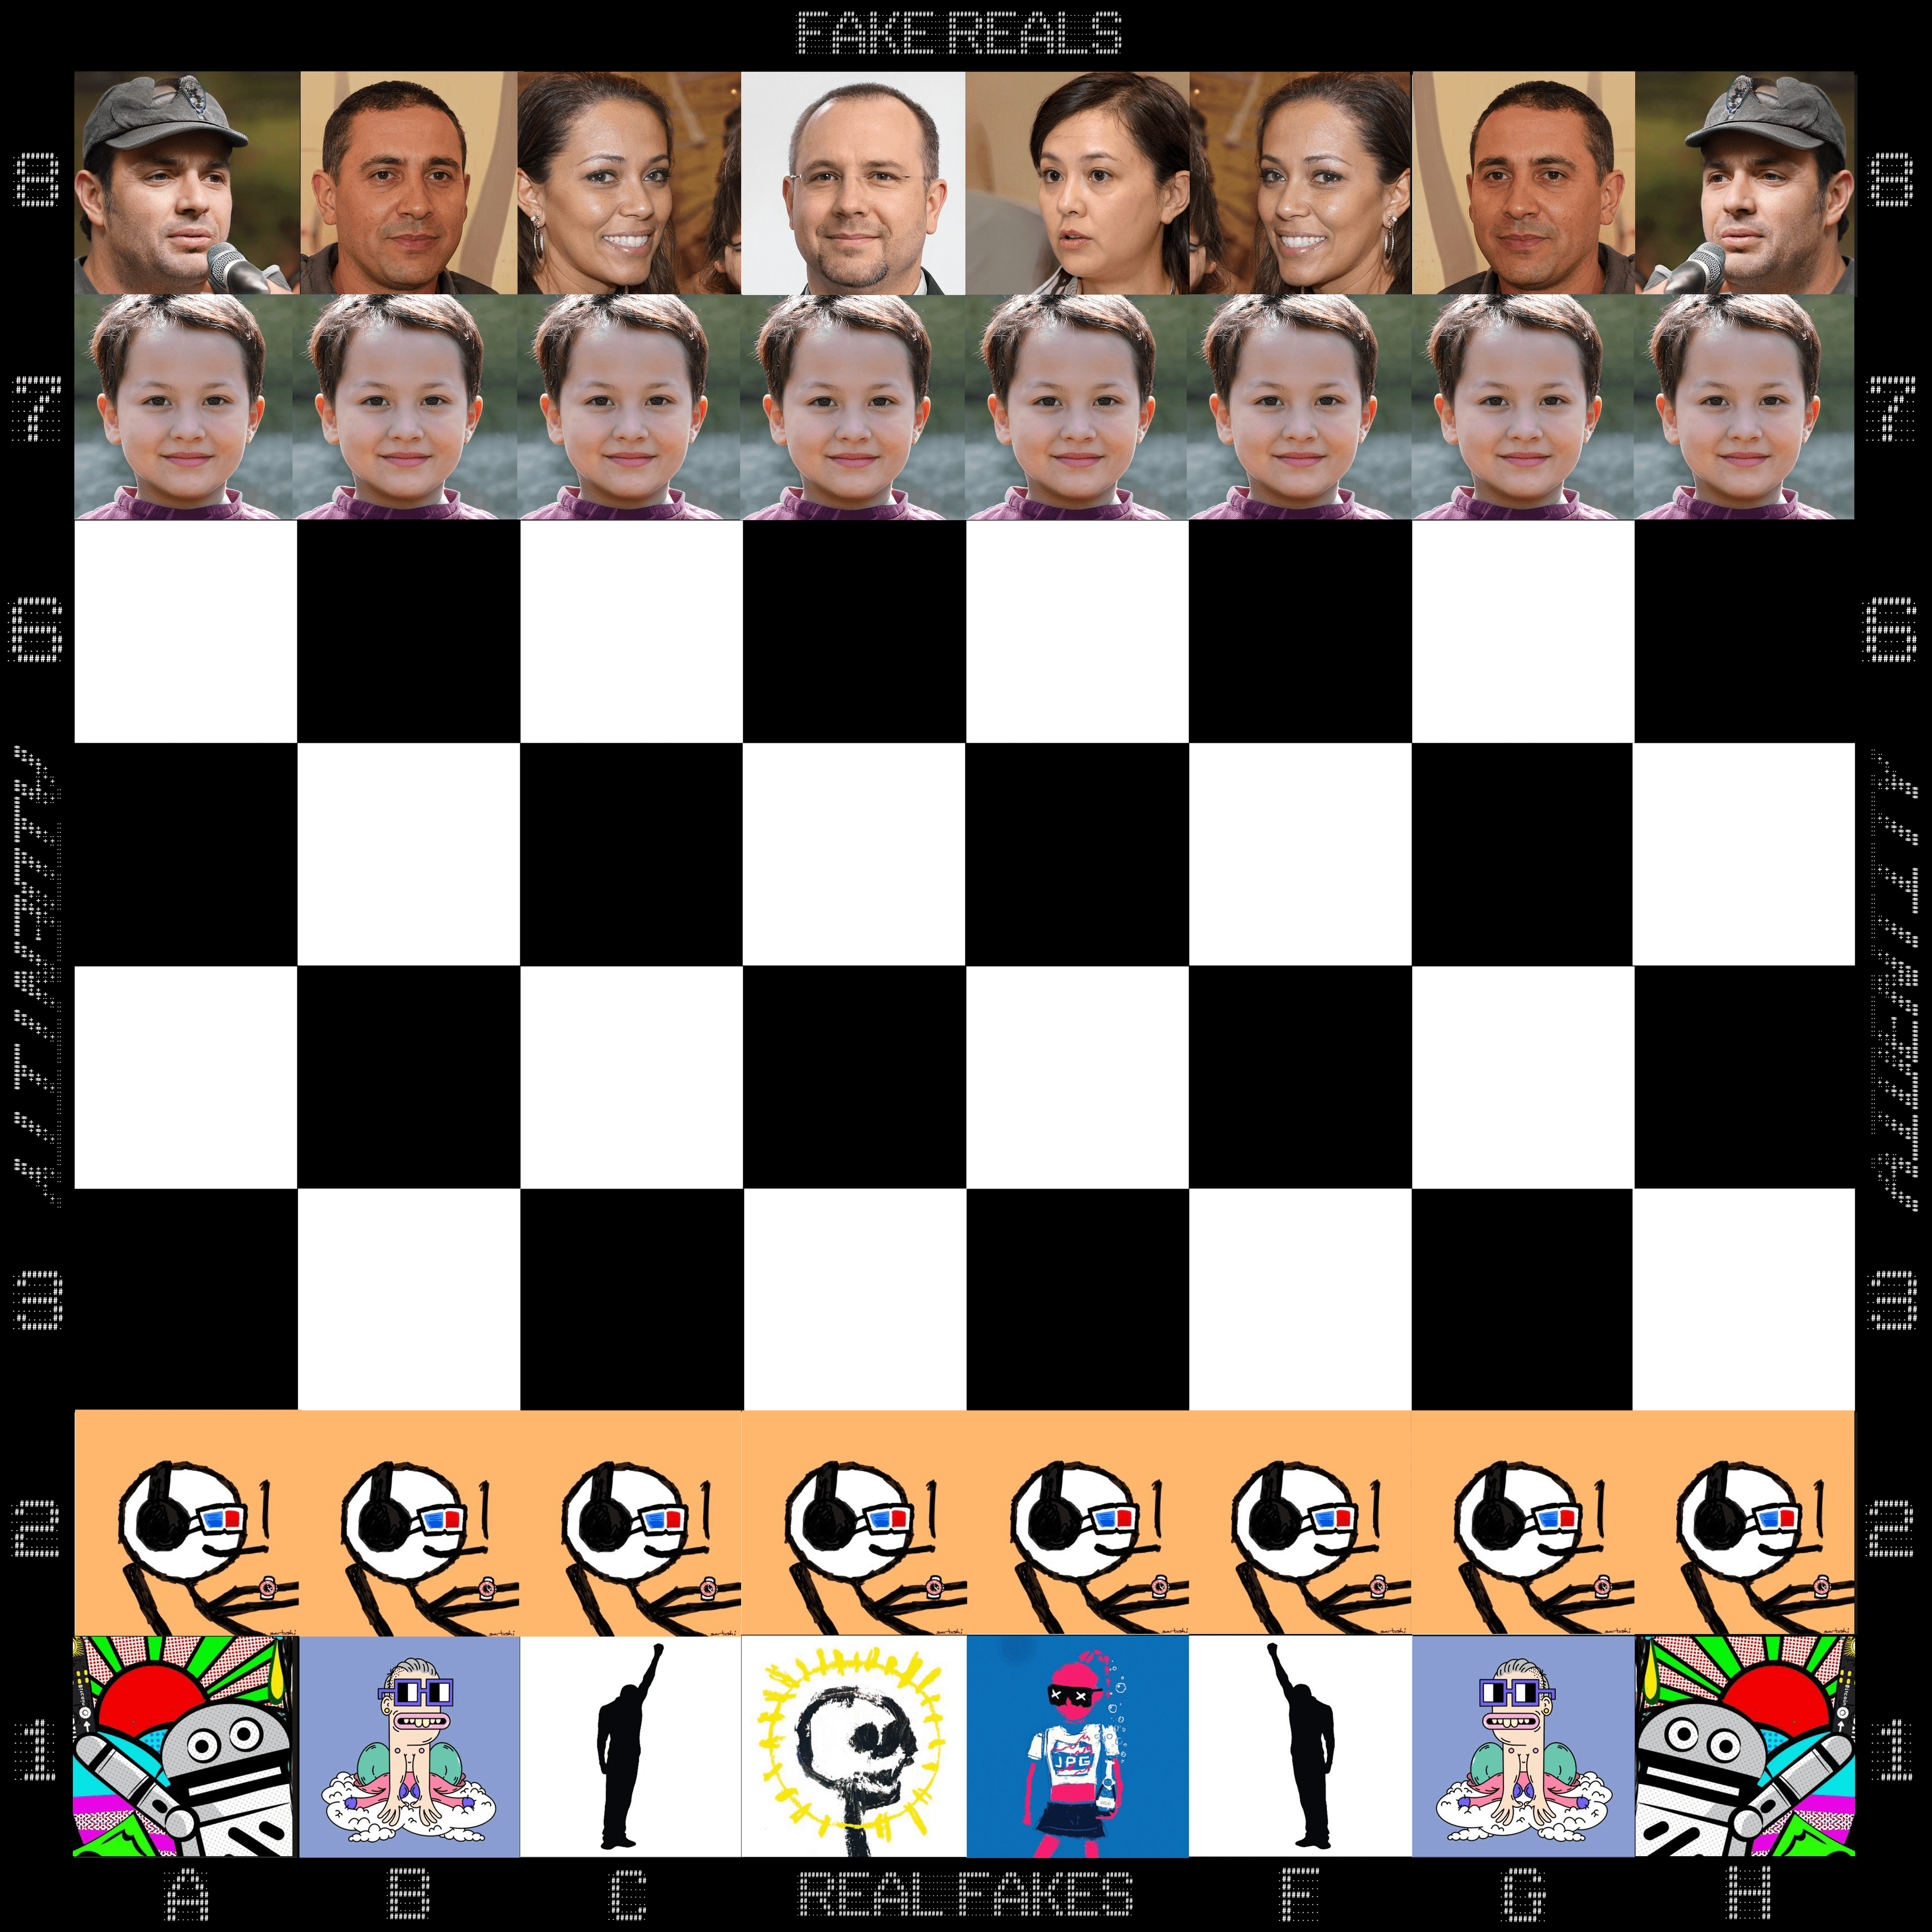 AIdentity Chess